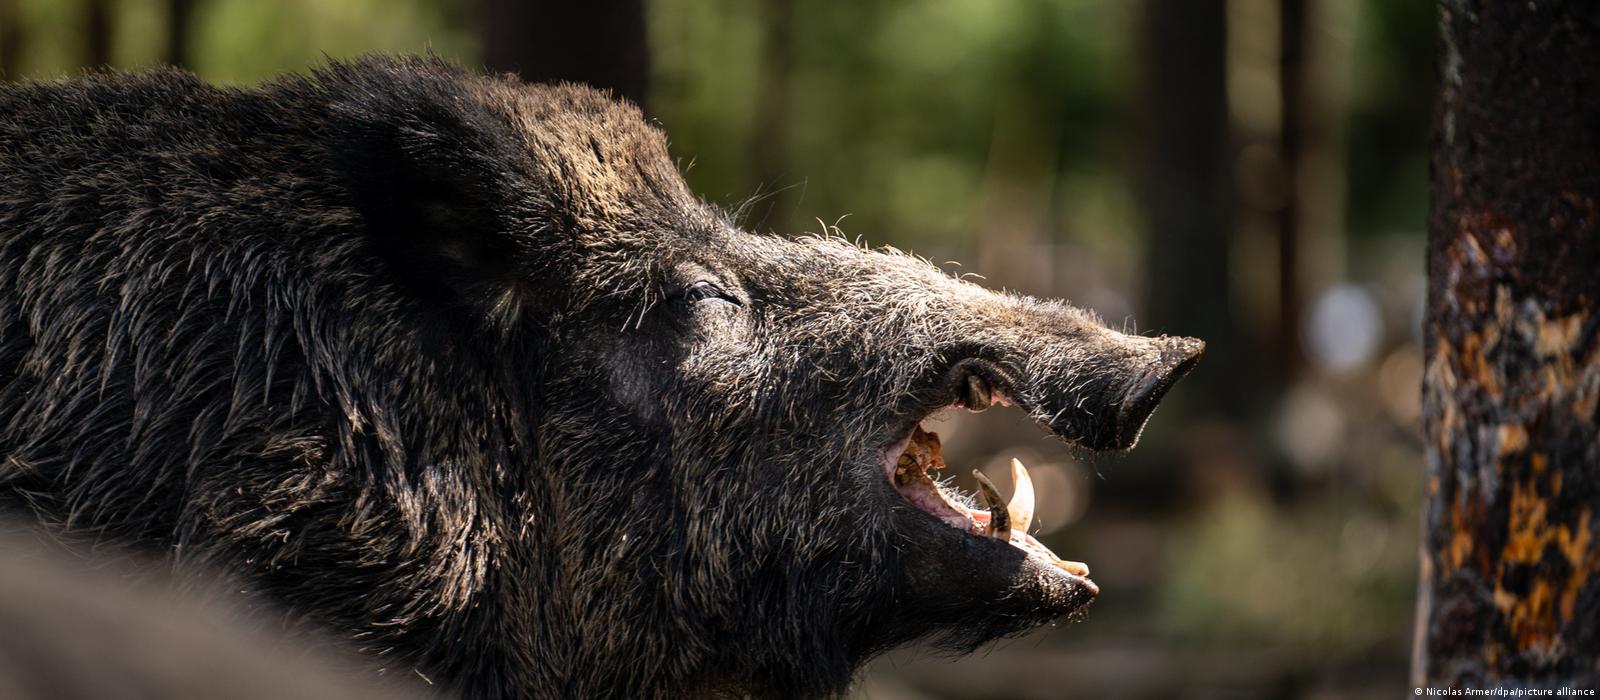 German wildlife park renames 'Putin' the boar – DW – 04/20/2022